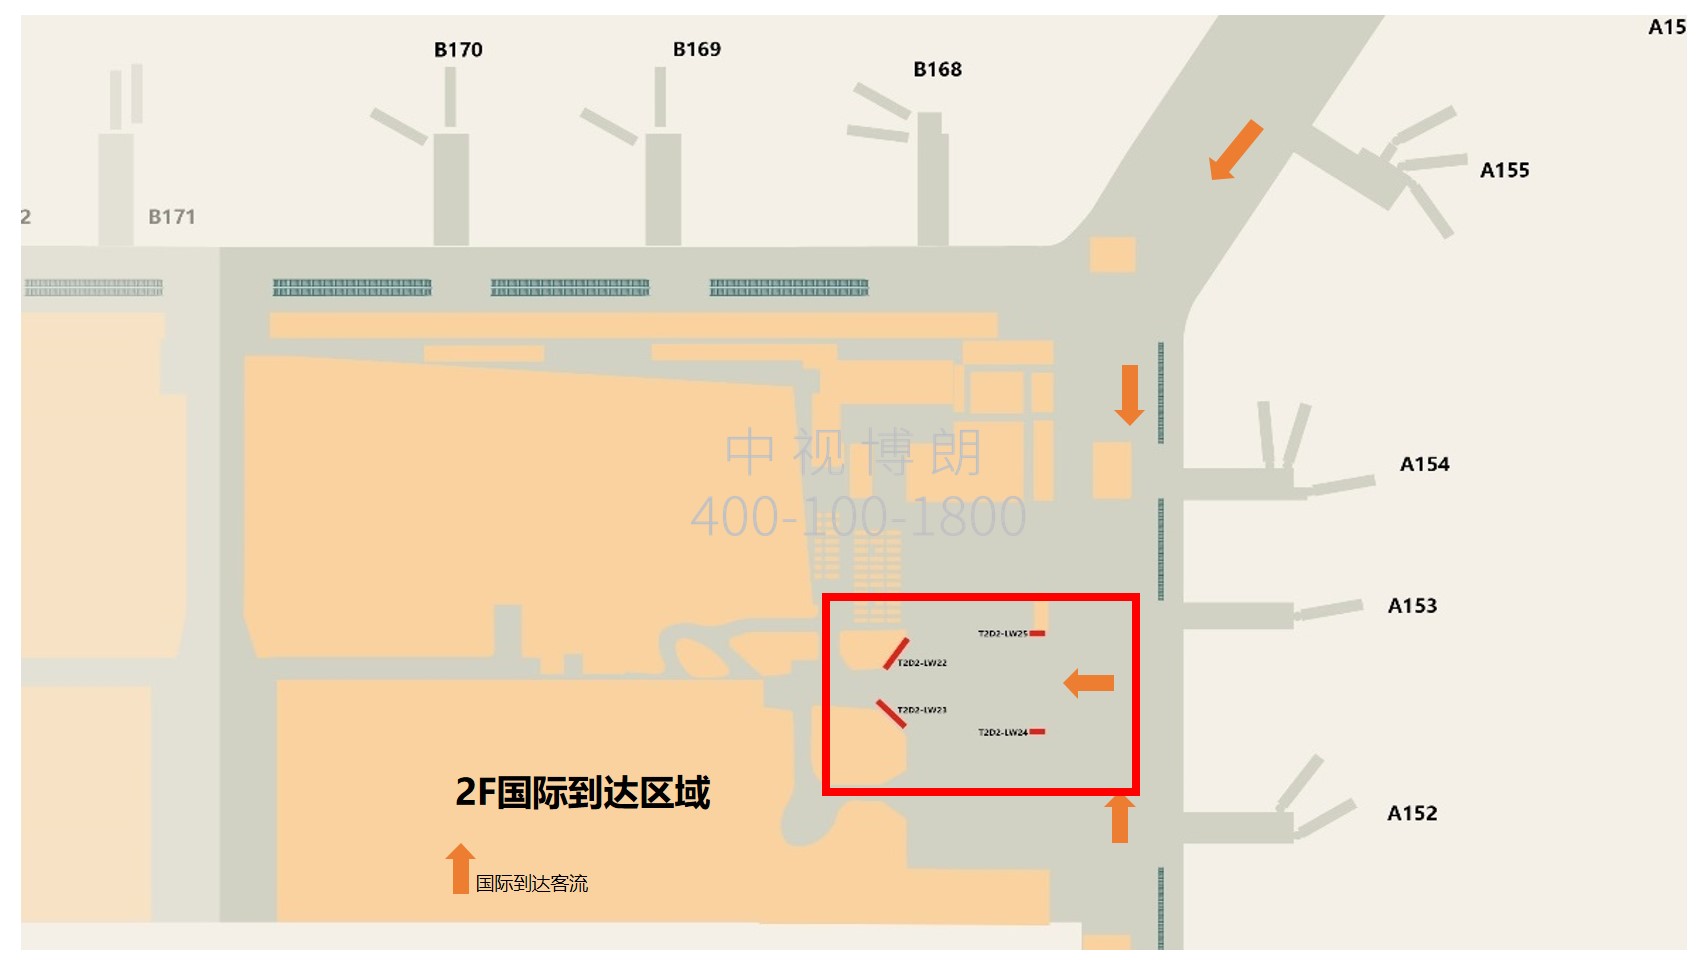 Guangzhou Airport Advertising-T2国际到达海关后方灯箱套装1点位图